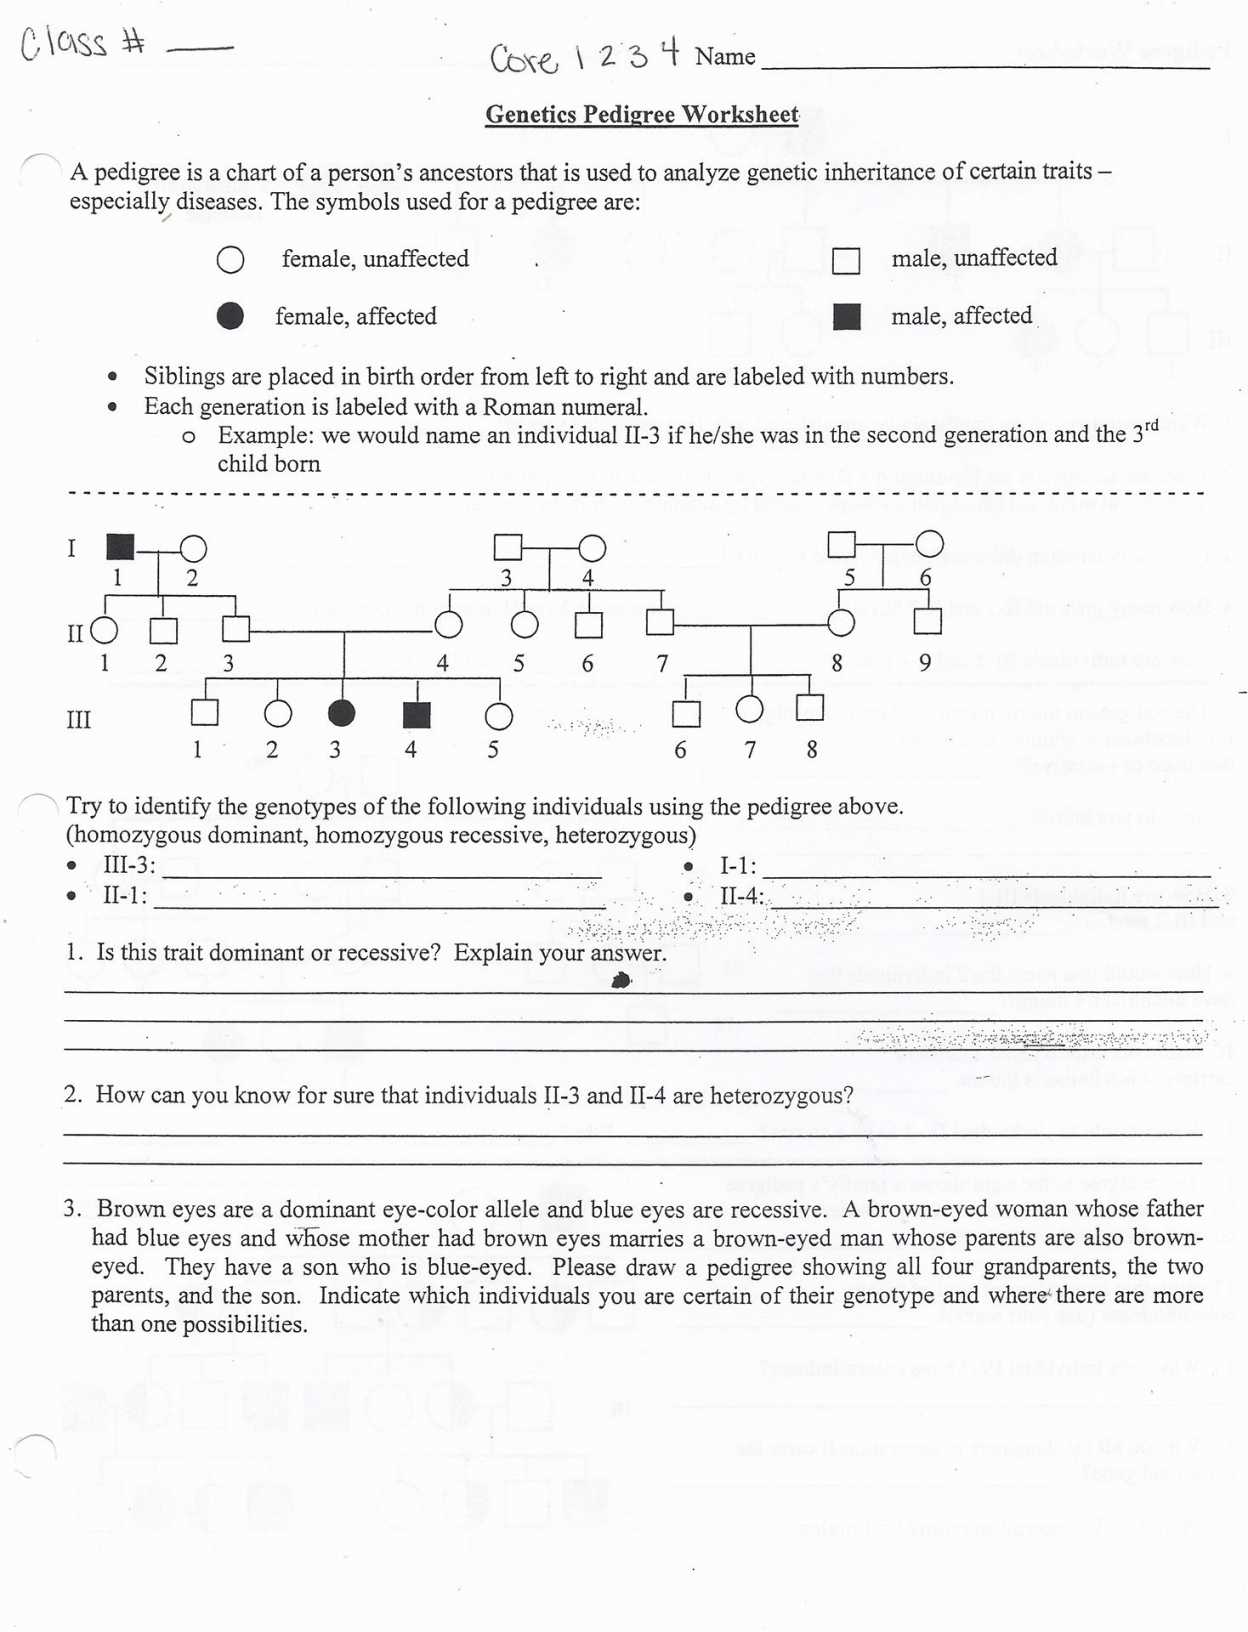 Genetics Practice Problems Worksheet Key or Worksheet Genetics Pedigree Worksheet Concept Pedigree Practice